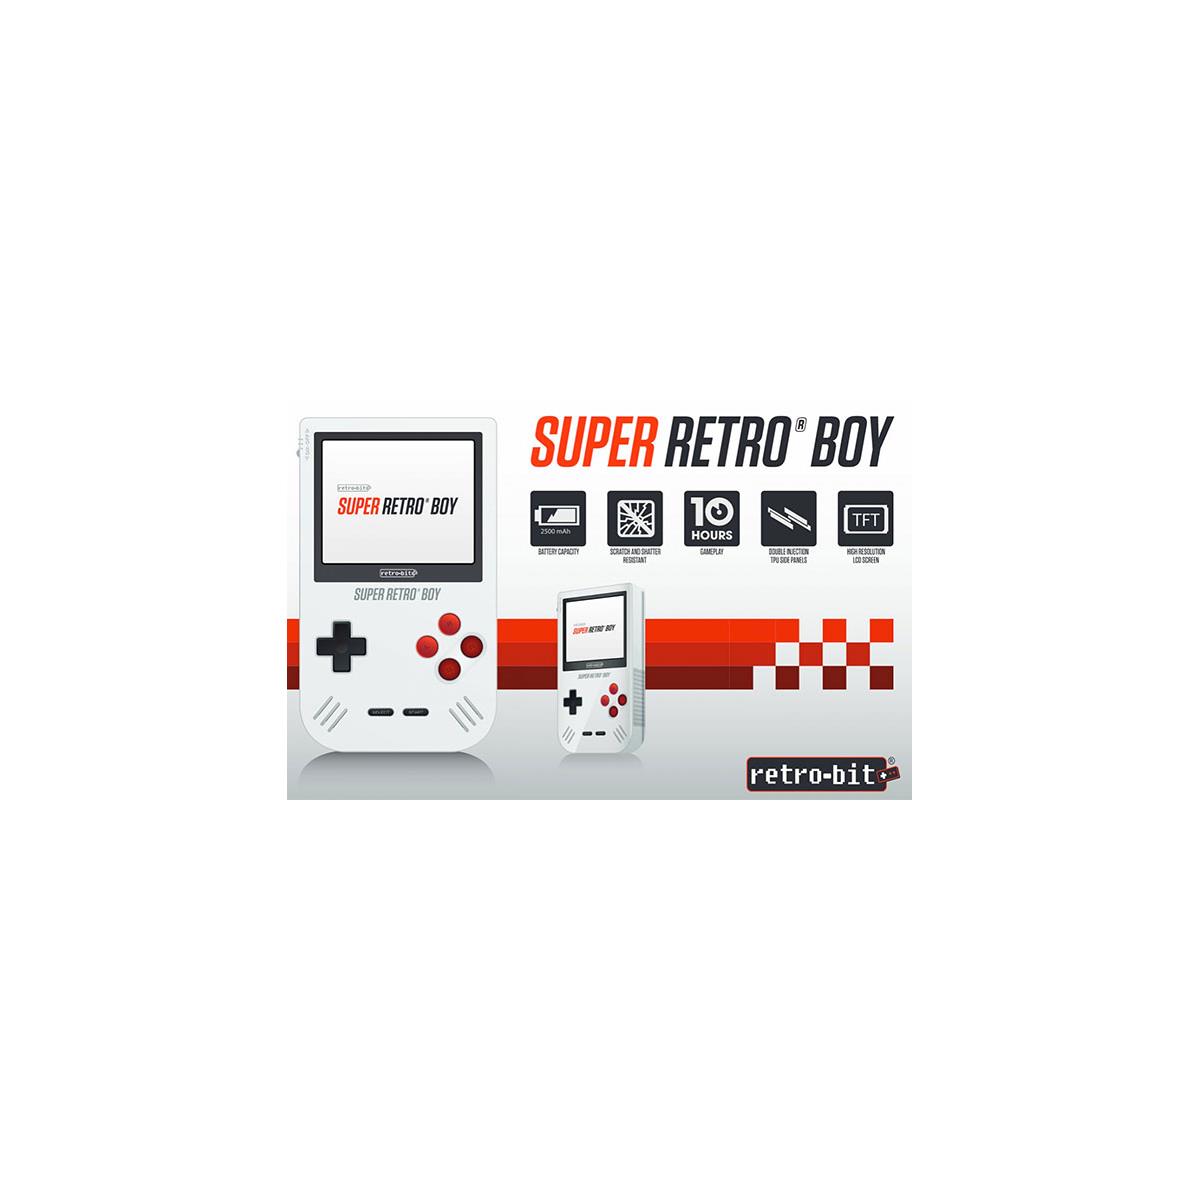 Super Retro Boy Emulator Resurrects Classic Nintendo Game Boy